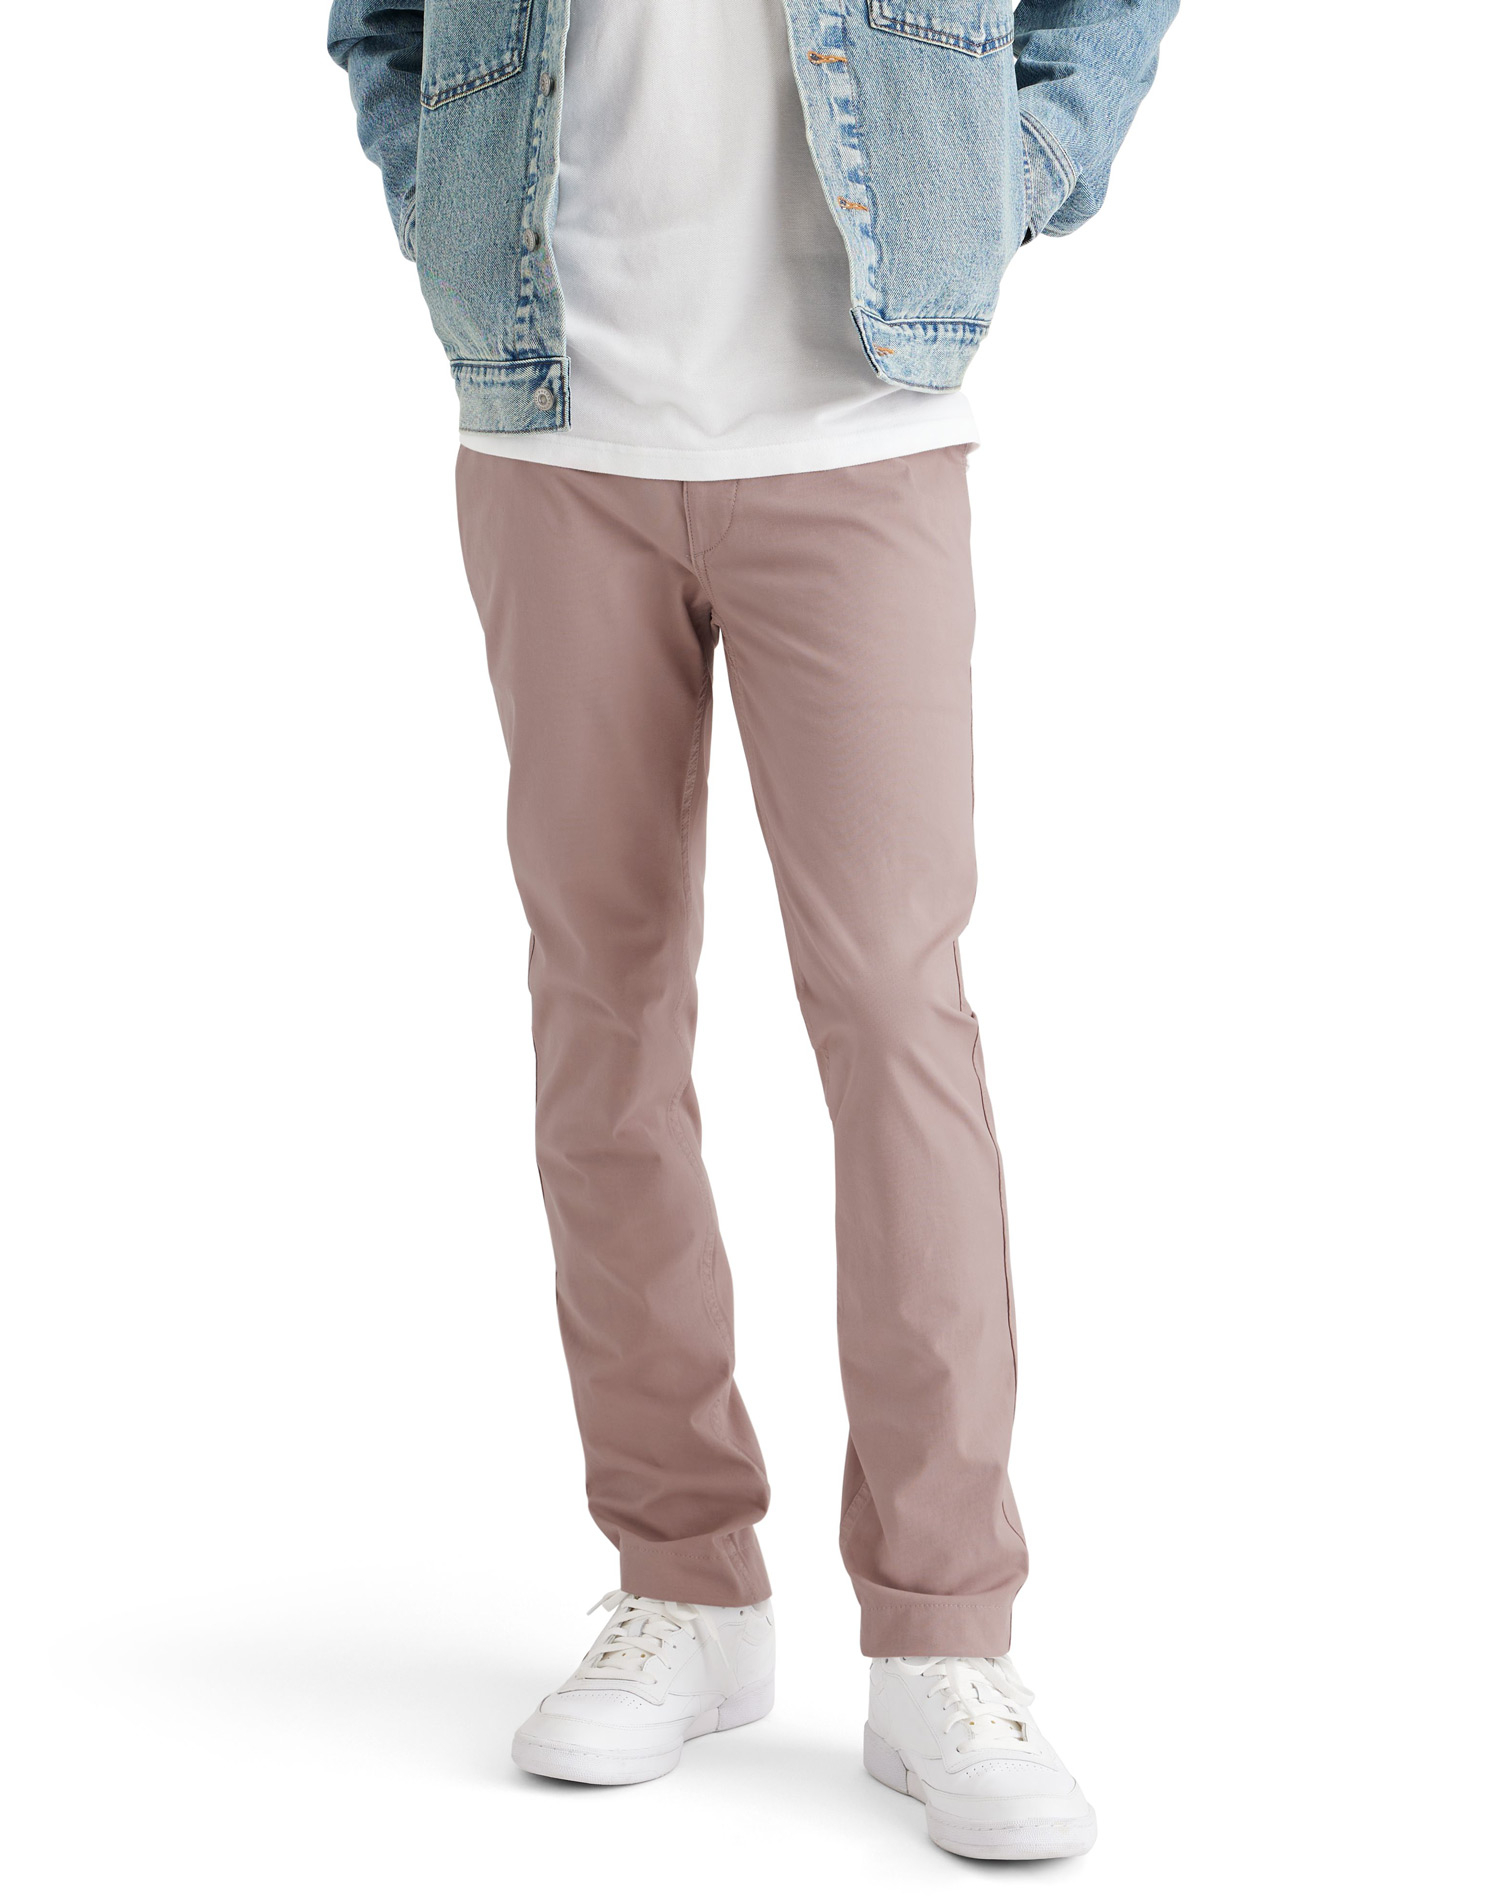 Dockers pantalones de hombre Smart 360 flex California Khaki Skinny lightweight A3130-0018 burdeos